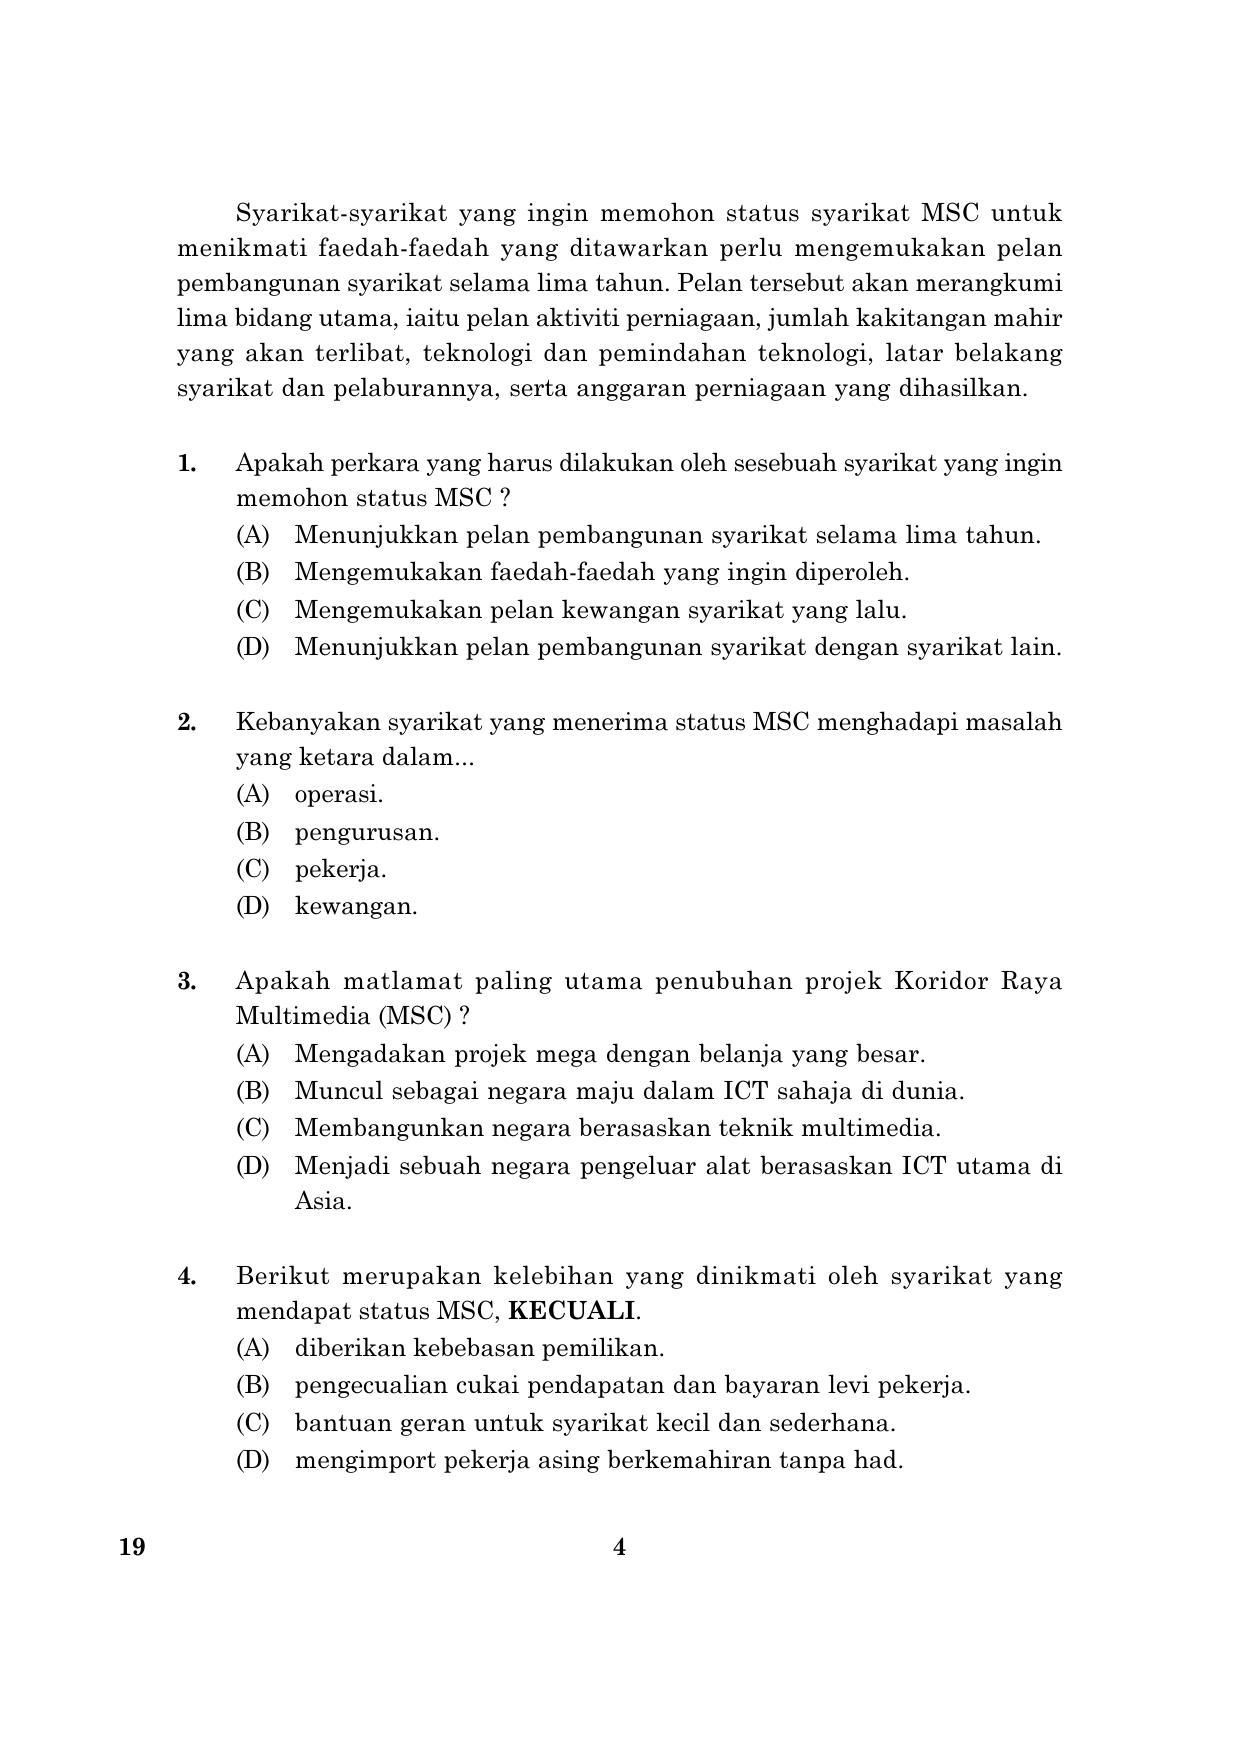 CBSE Class 10 019 Bahasamelayu English 2016 Question Paper - Page 4